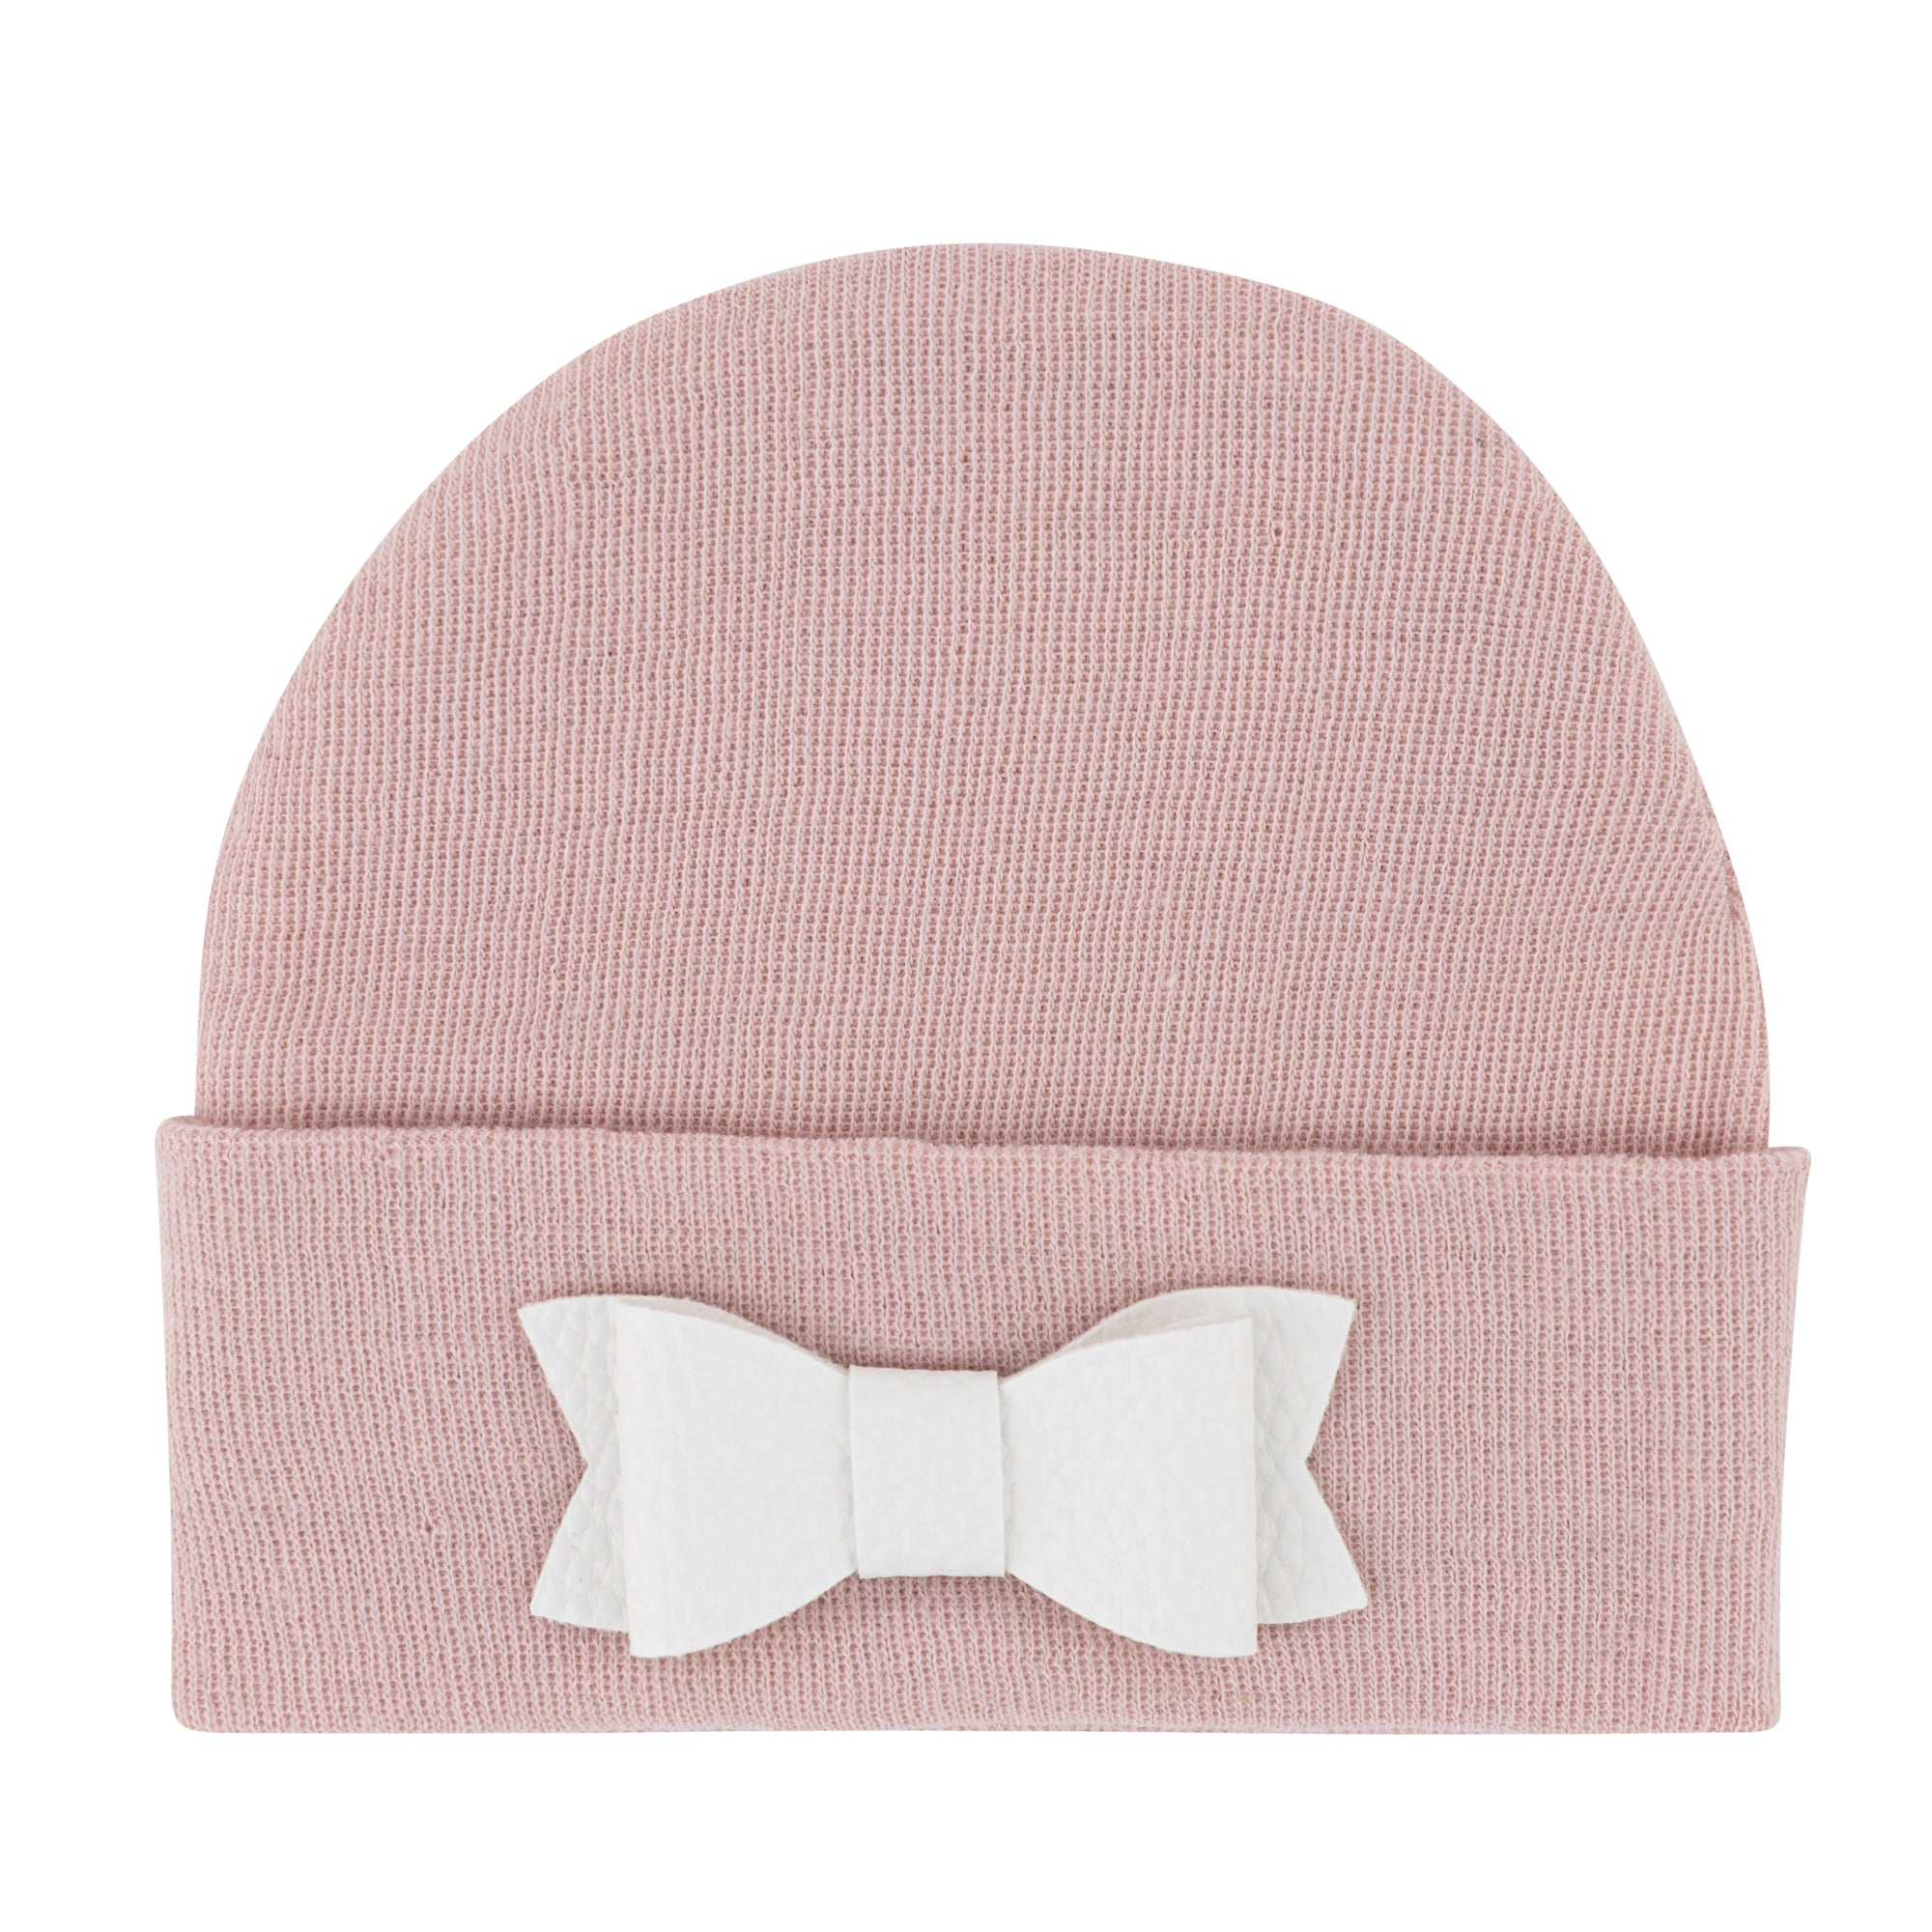 Newborn Hospital Hats - Pink &amp; White